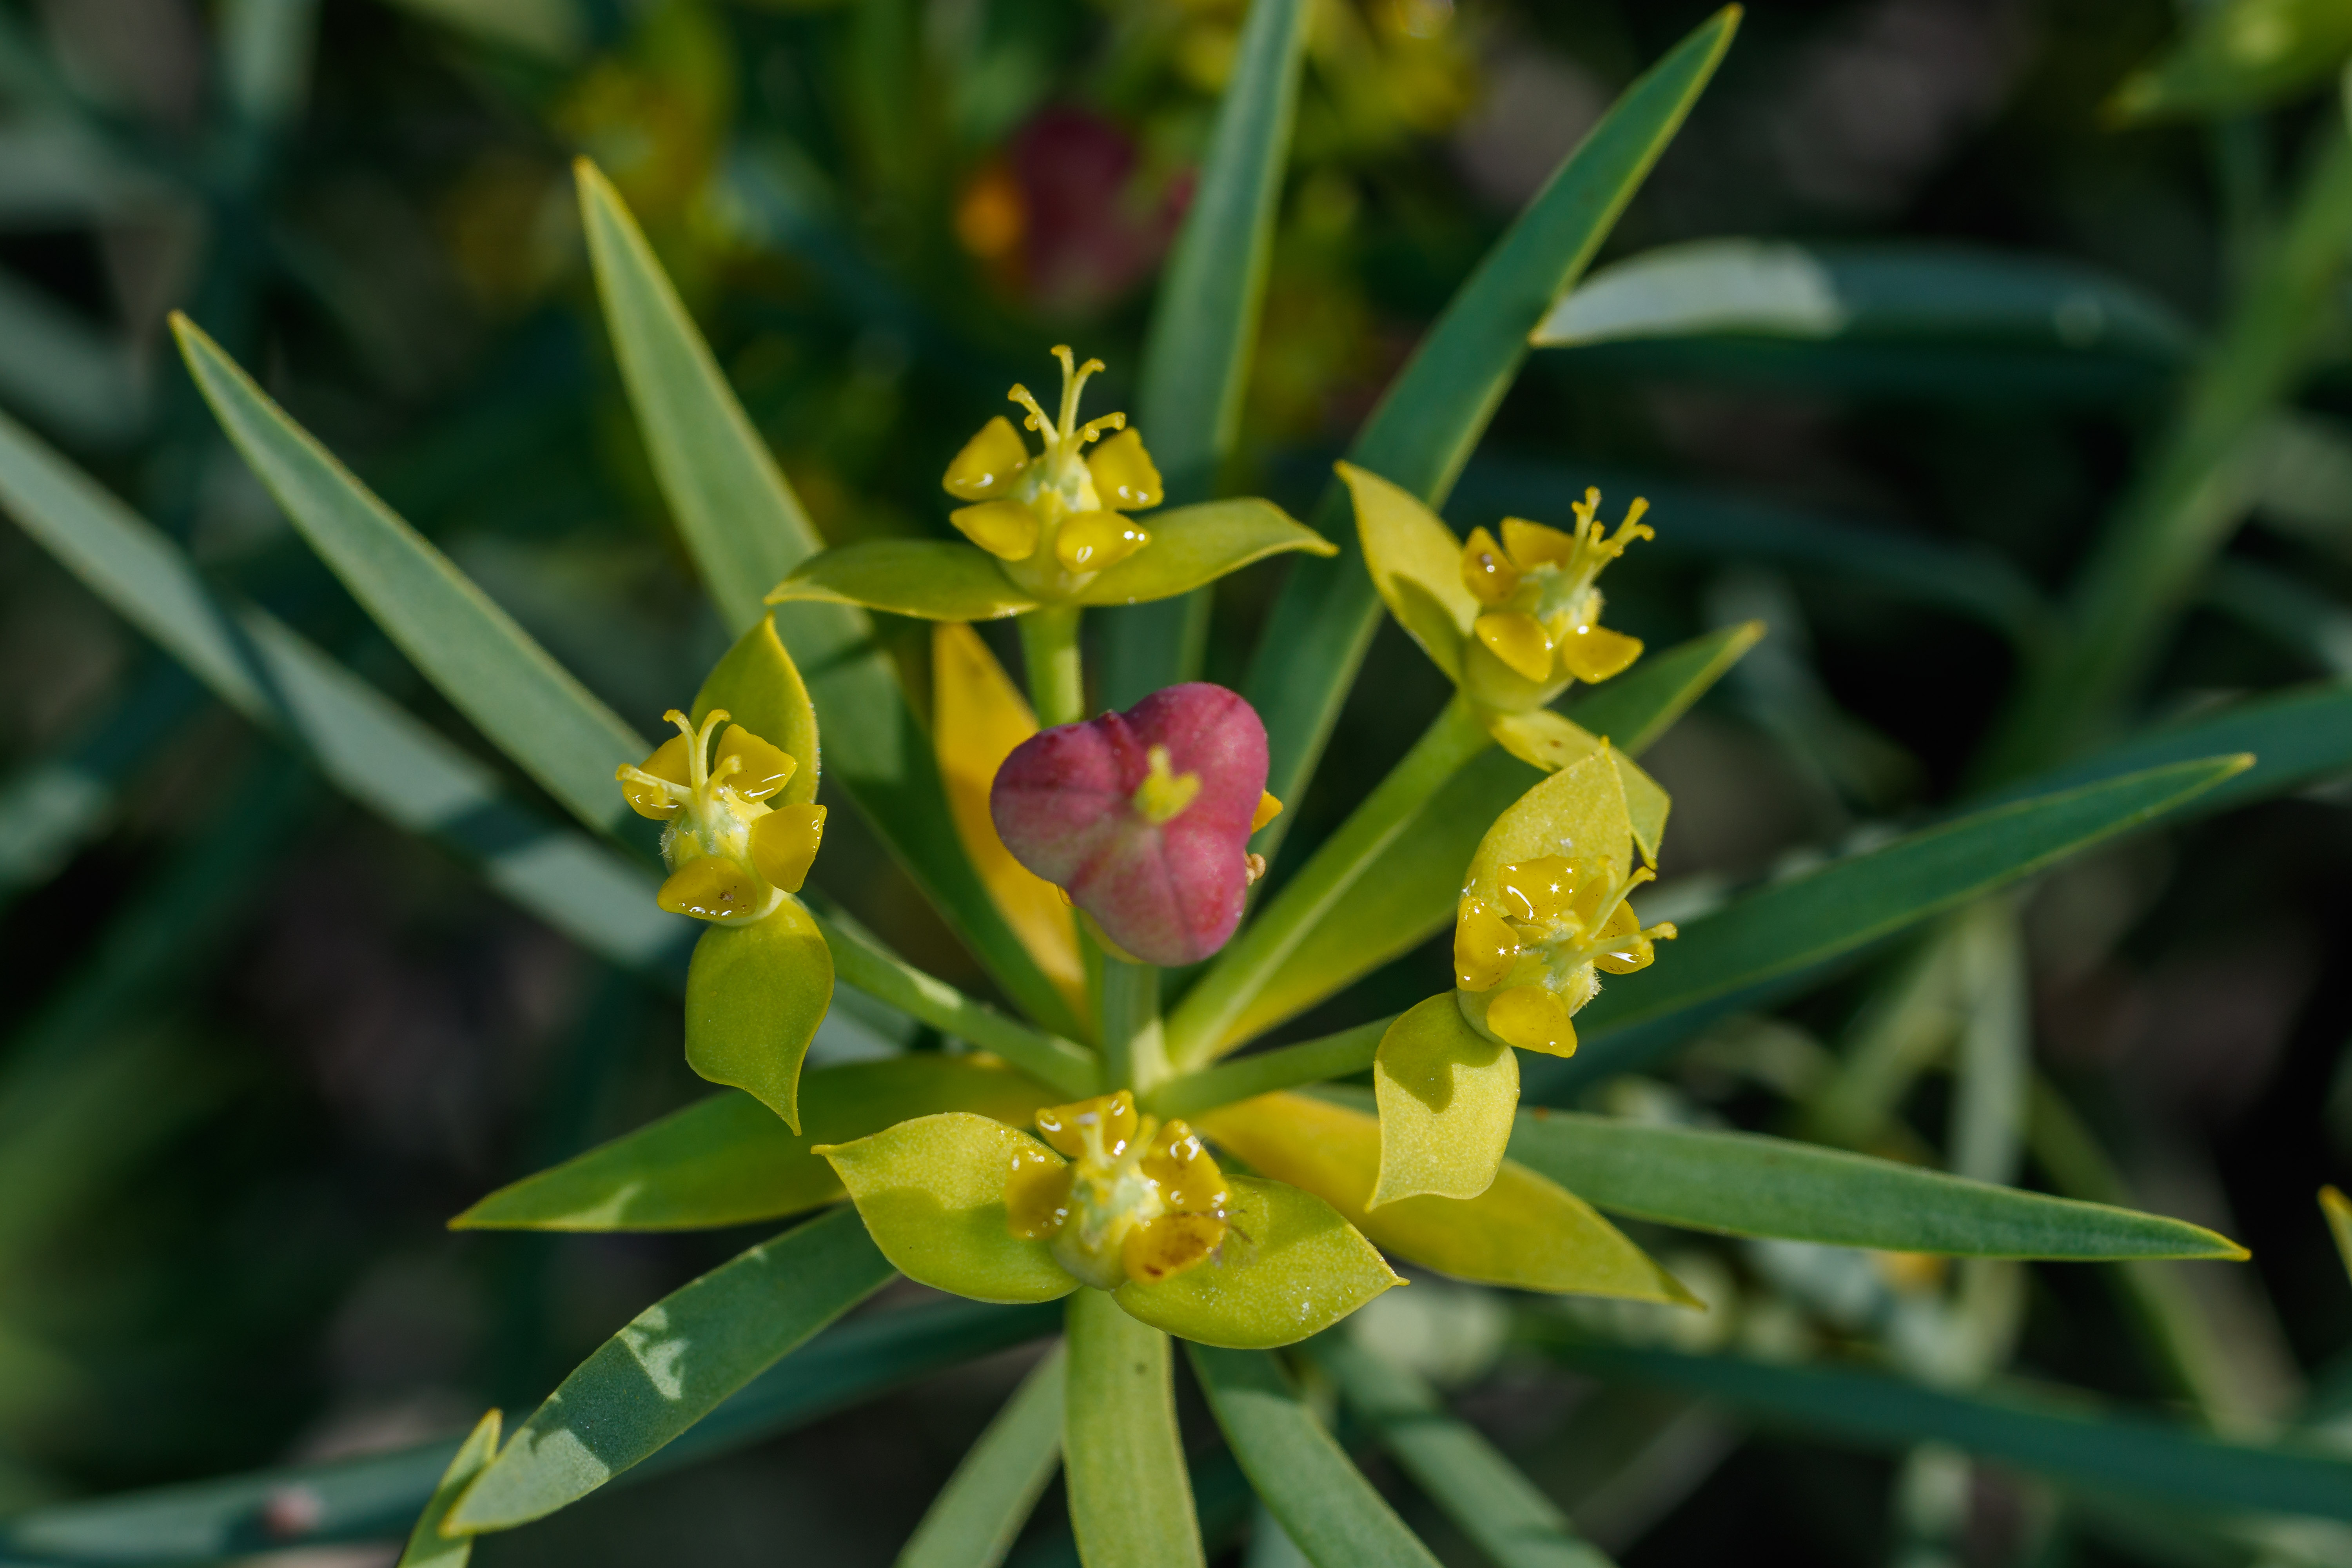  MG 0956  Euphorbia lamarckii subsp wildpretii